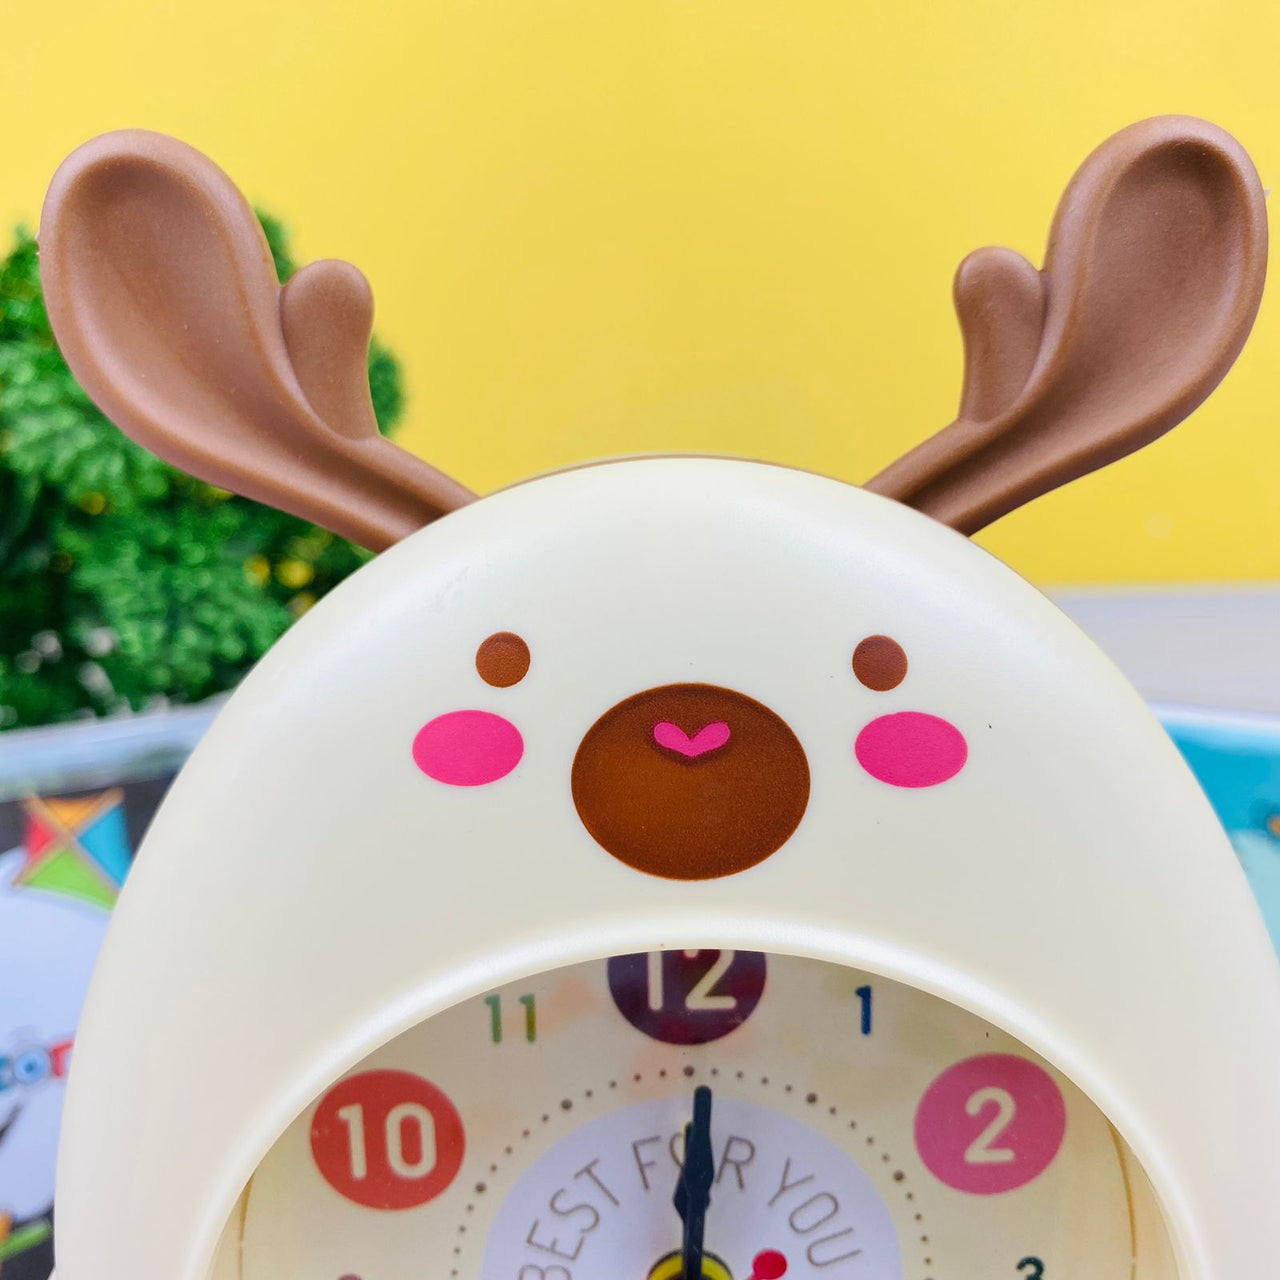 deer shaped table alarm clock